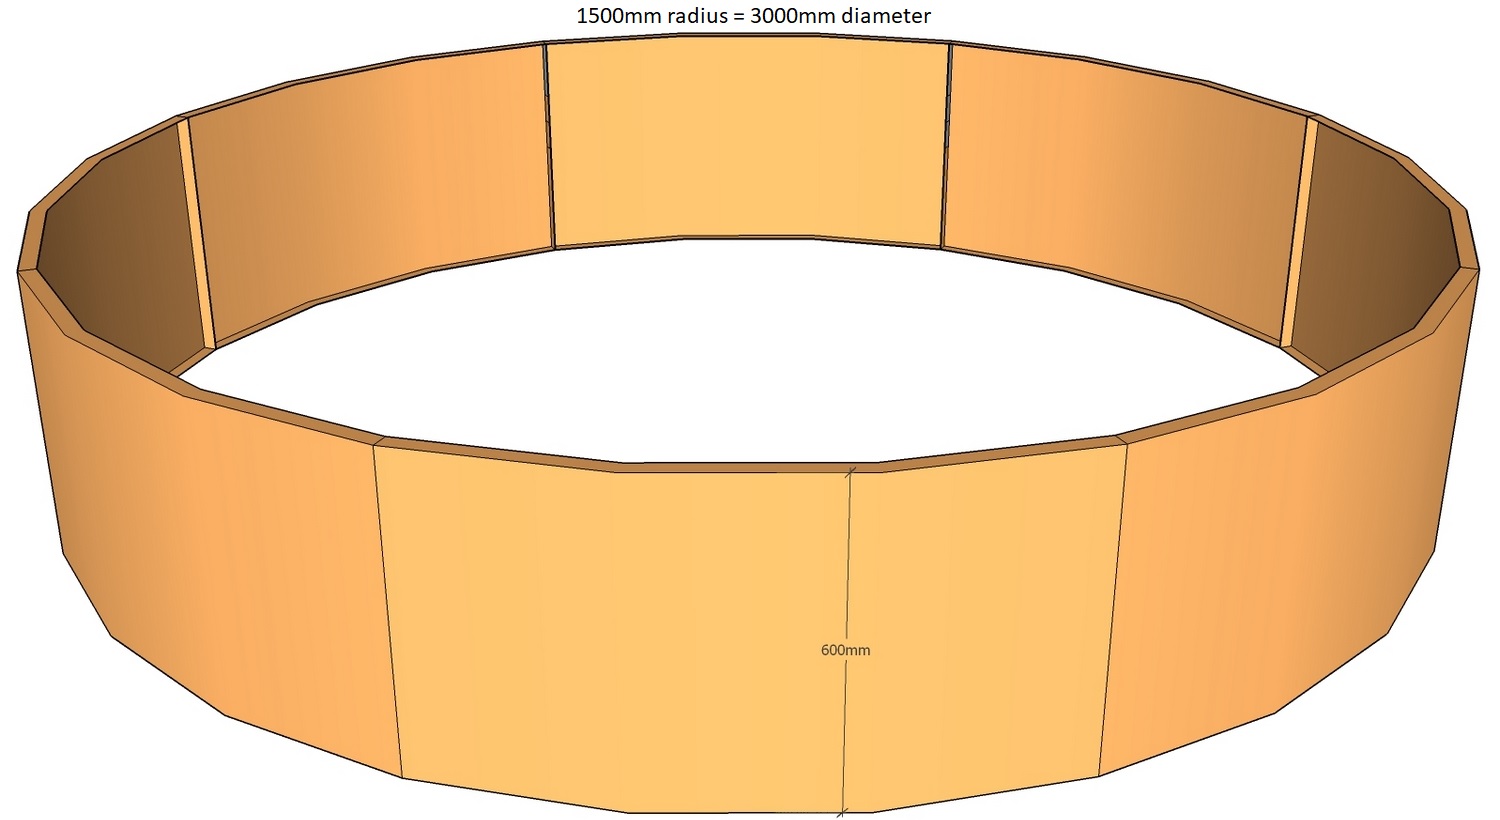 circular corten planter 1500mm radius x 900mm tall